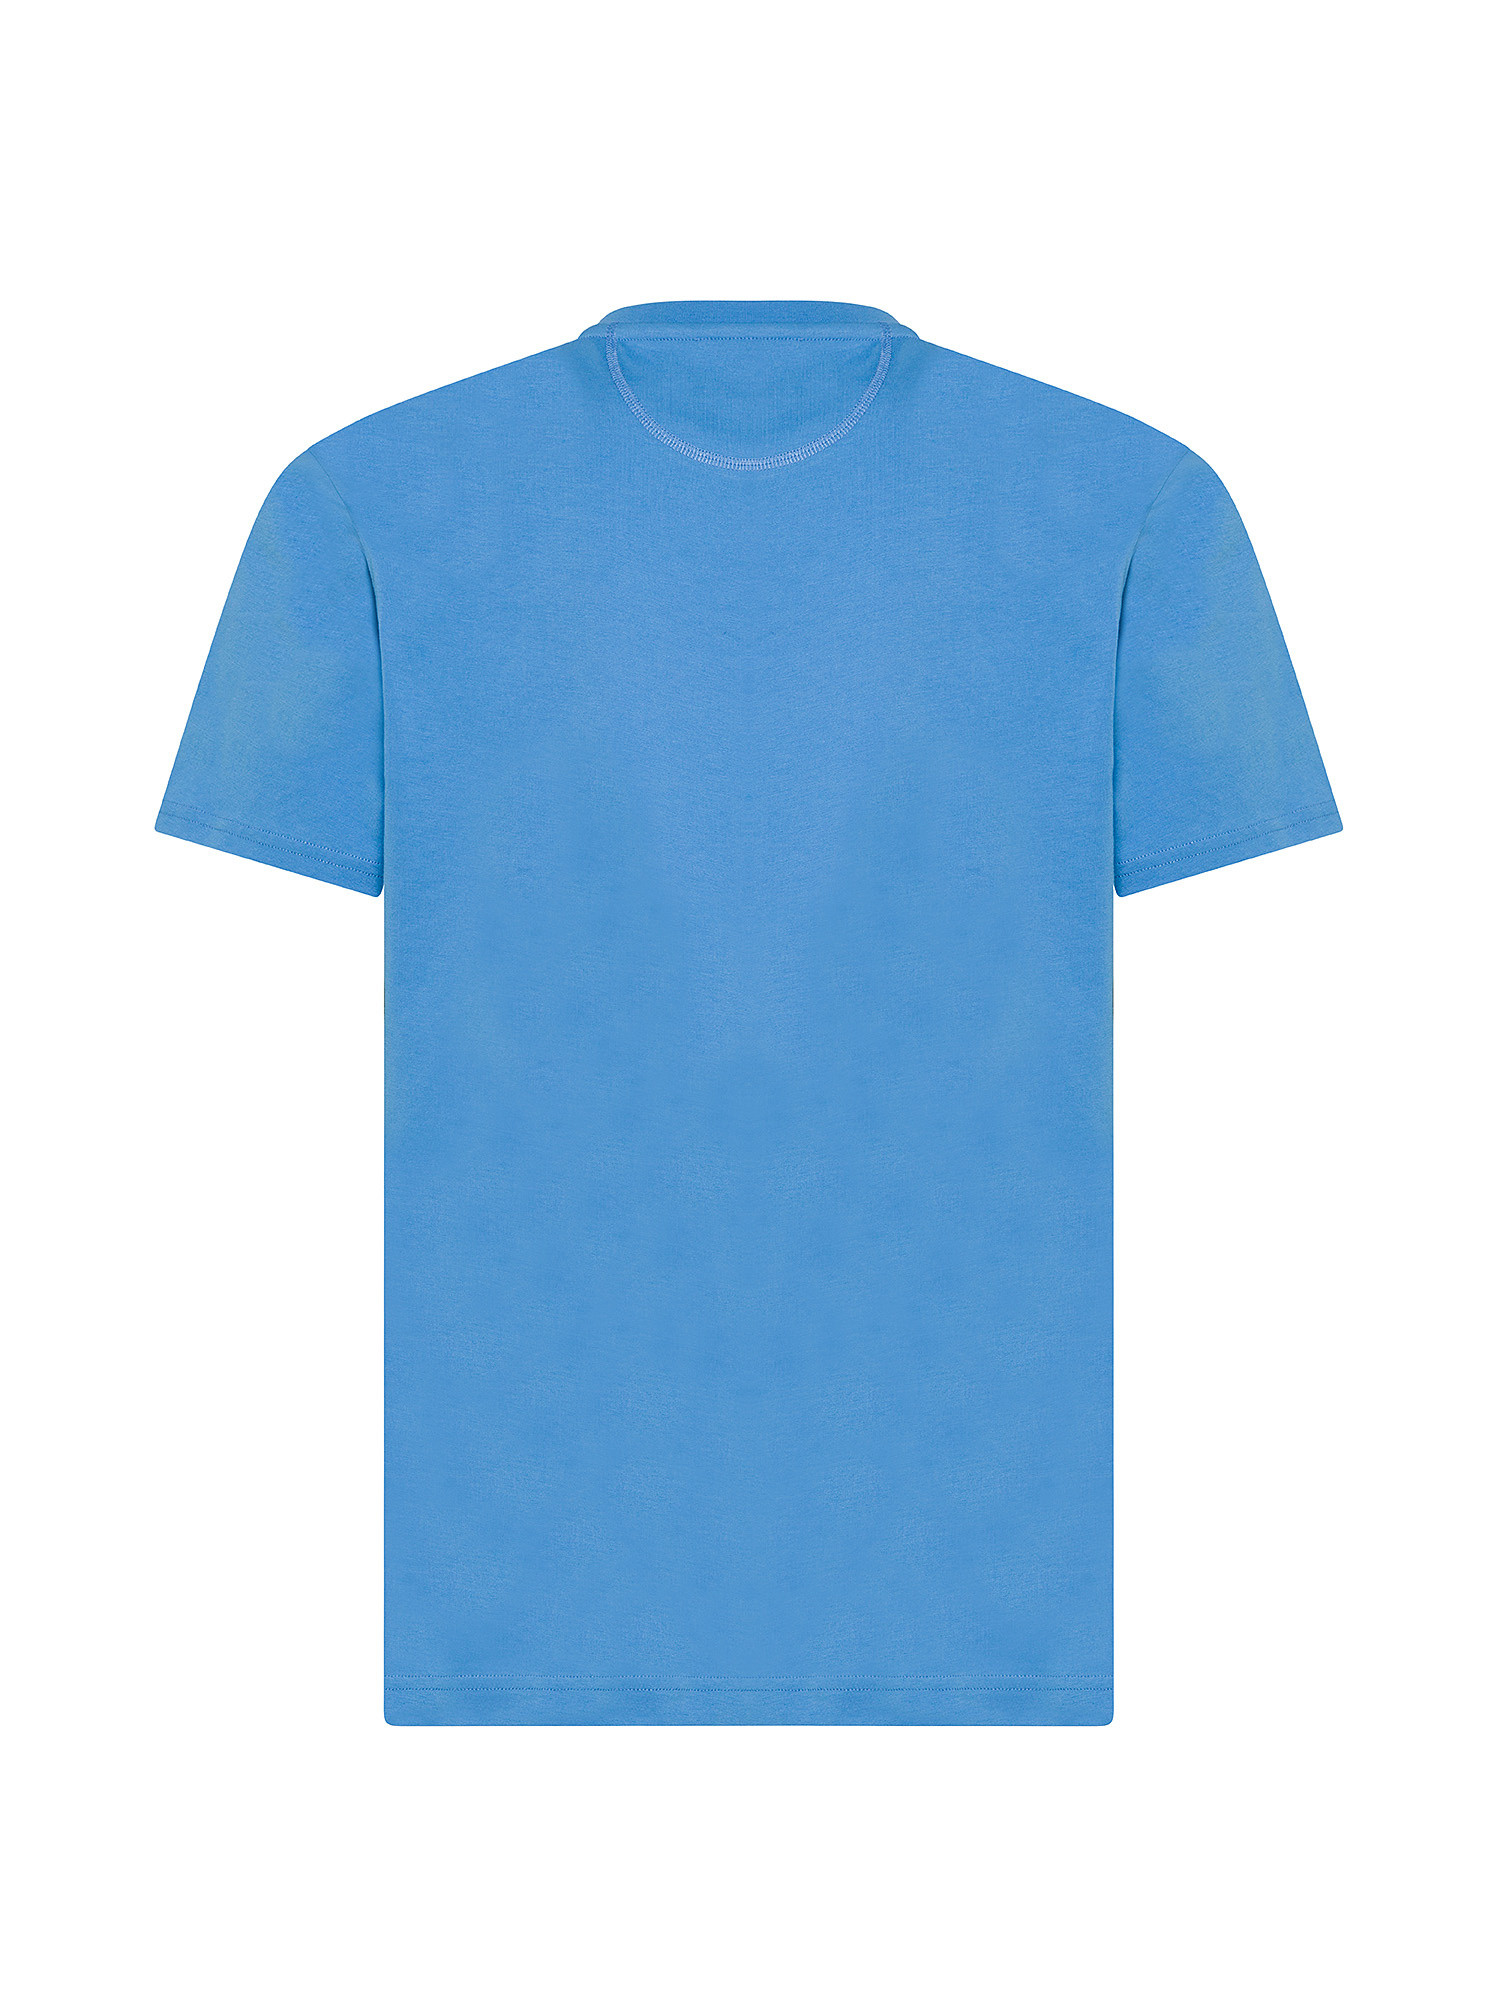 La Martina - T-shirt maniche corte in cotone jersey, Blu, large image number 1